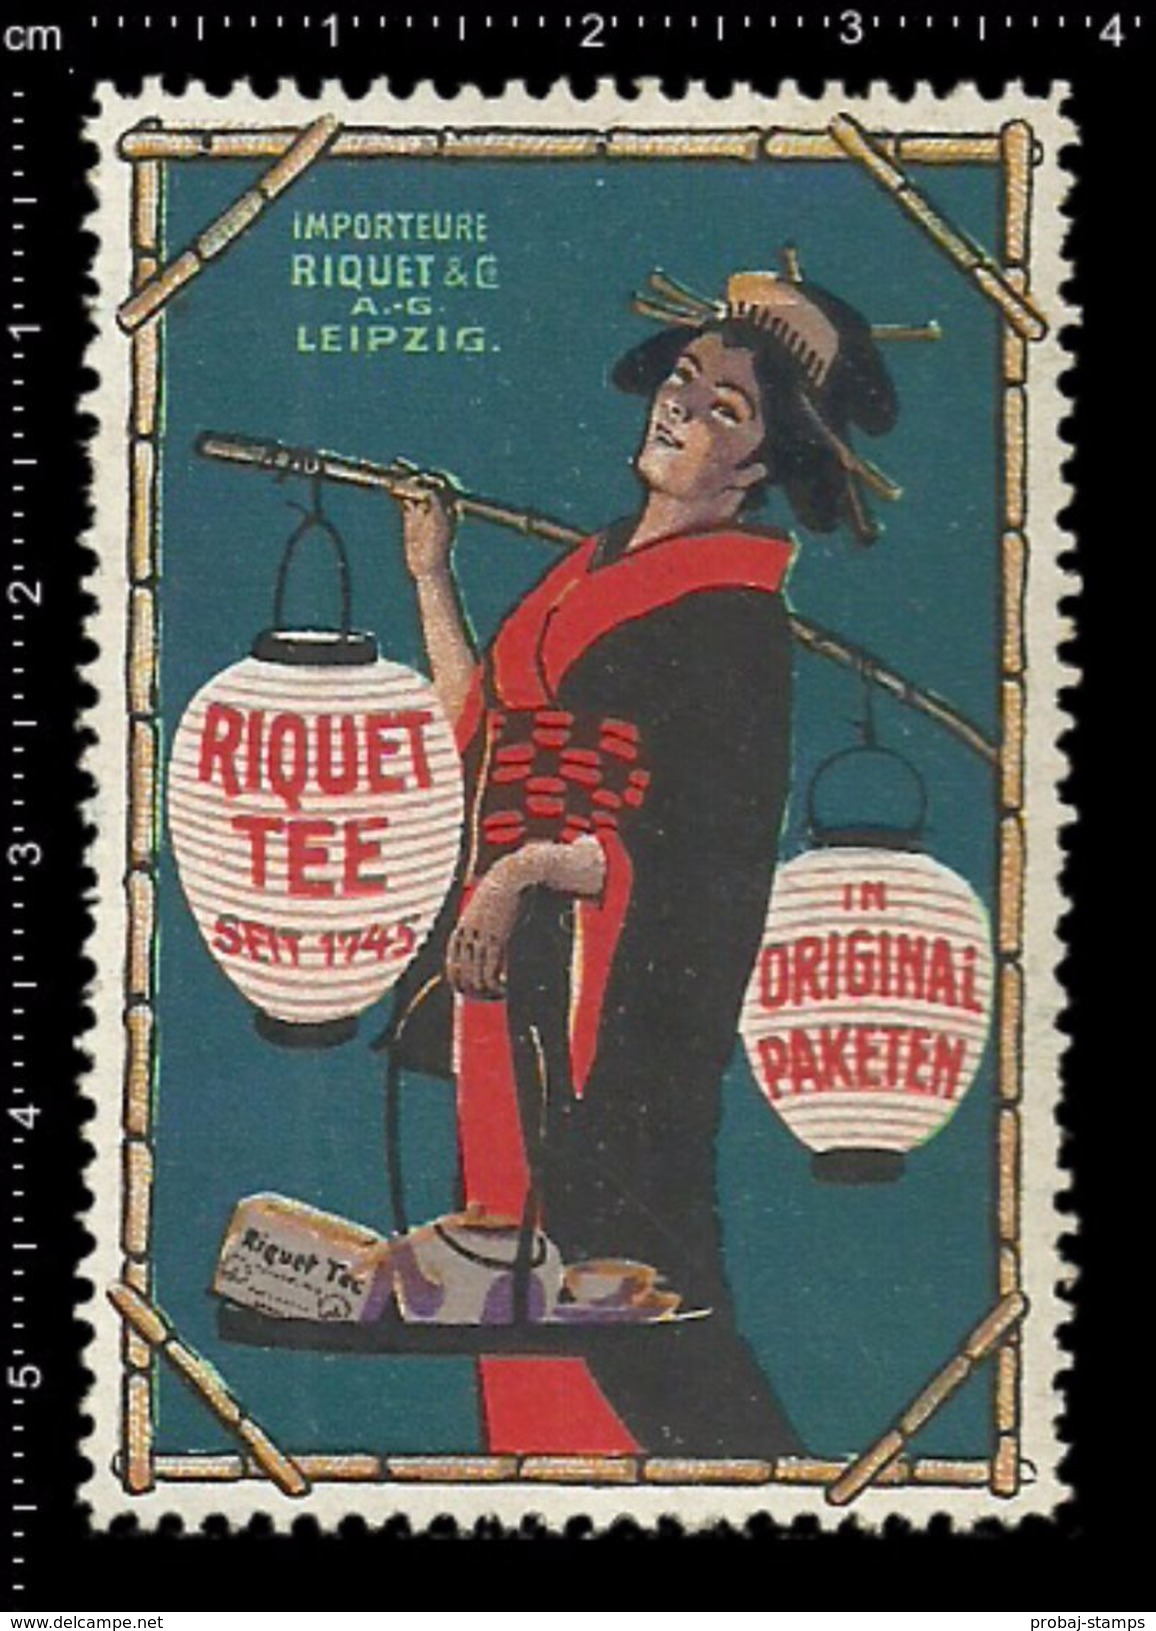 German Poster Stamps, Reklamemarke, Vignette, Cinderellas, Riquet Tee, Tea, Asian, Asien, Leipzig - Erinnophilie